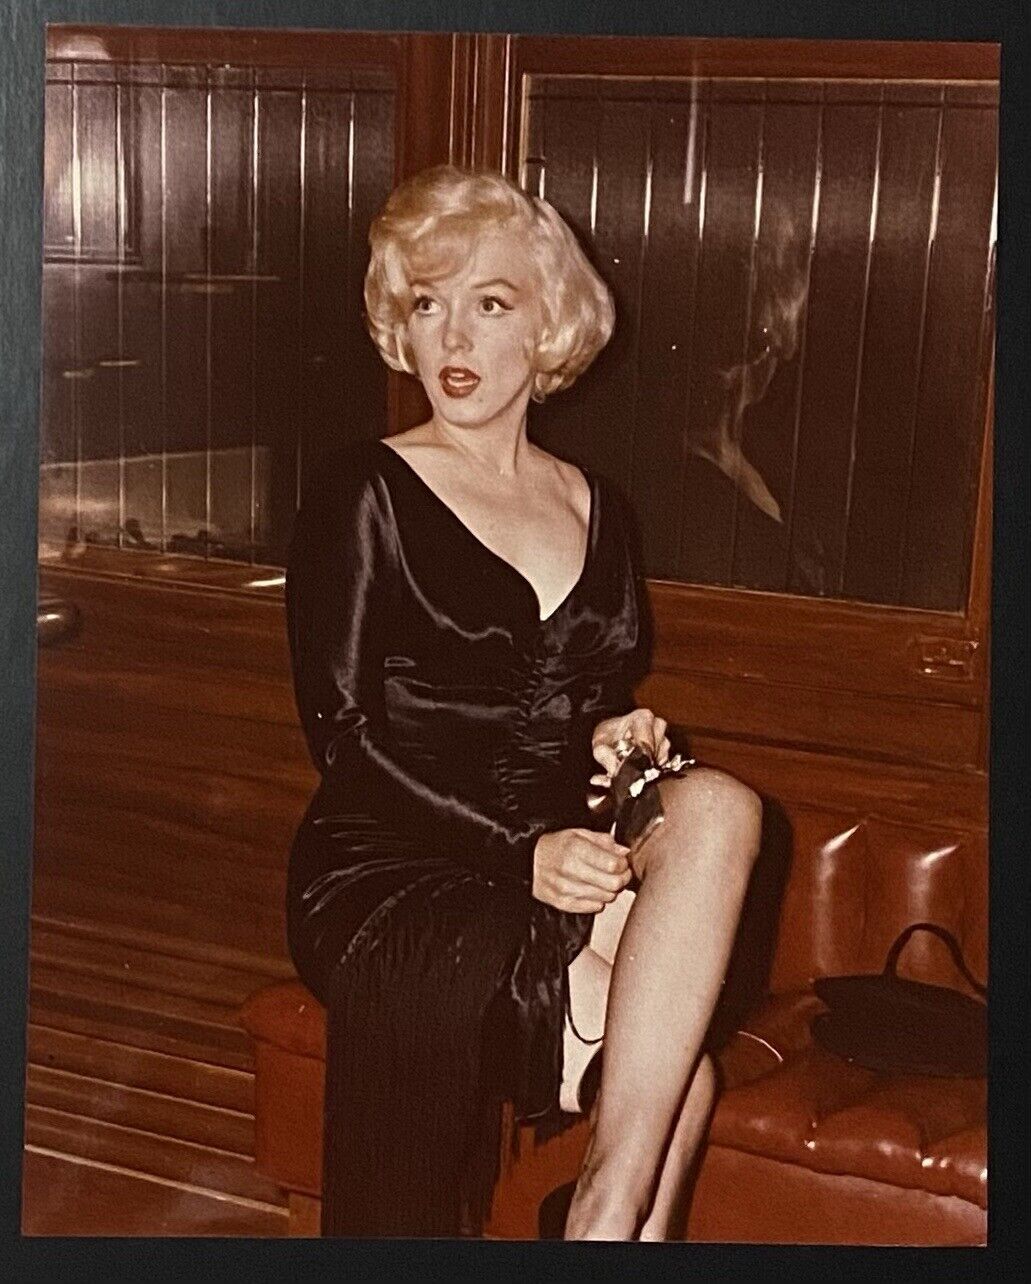 1959 Marilyn Monroe Original Photo Some Like It Hot Still Publicity